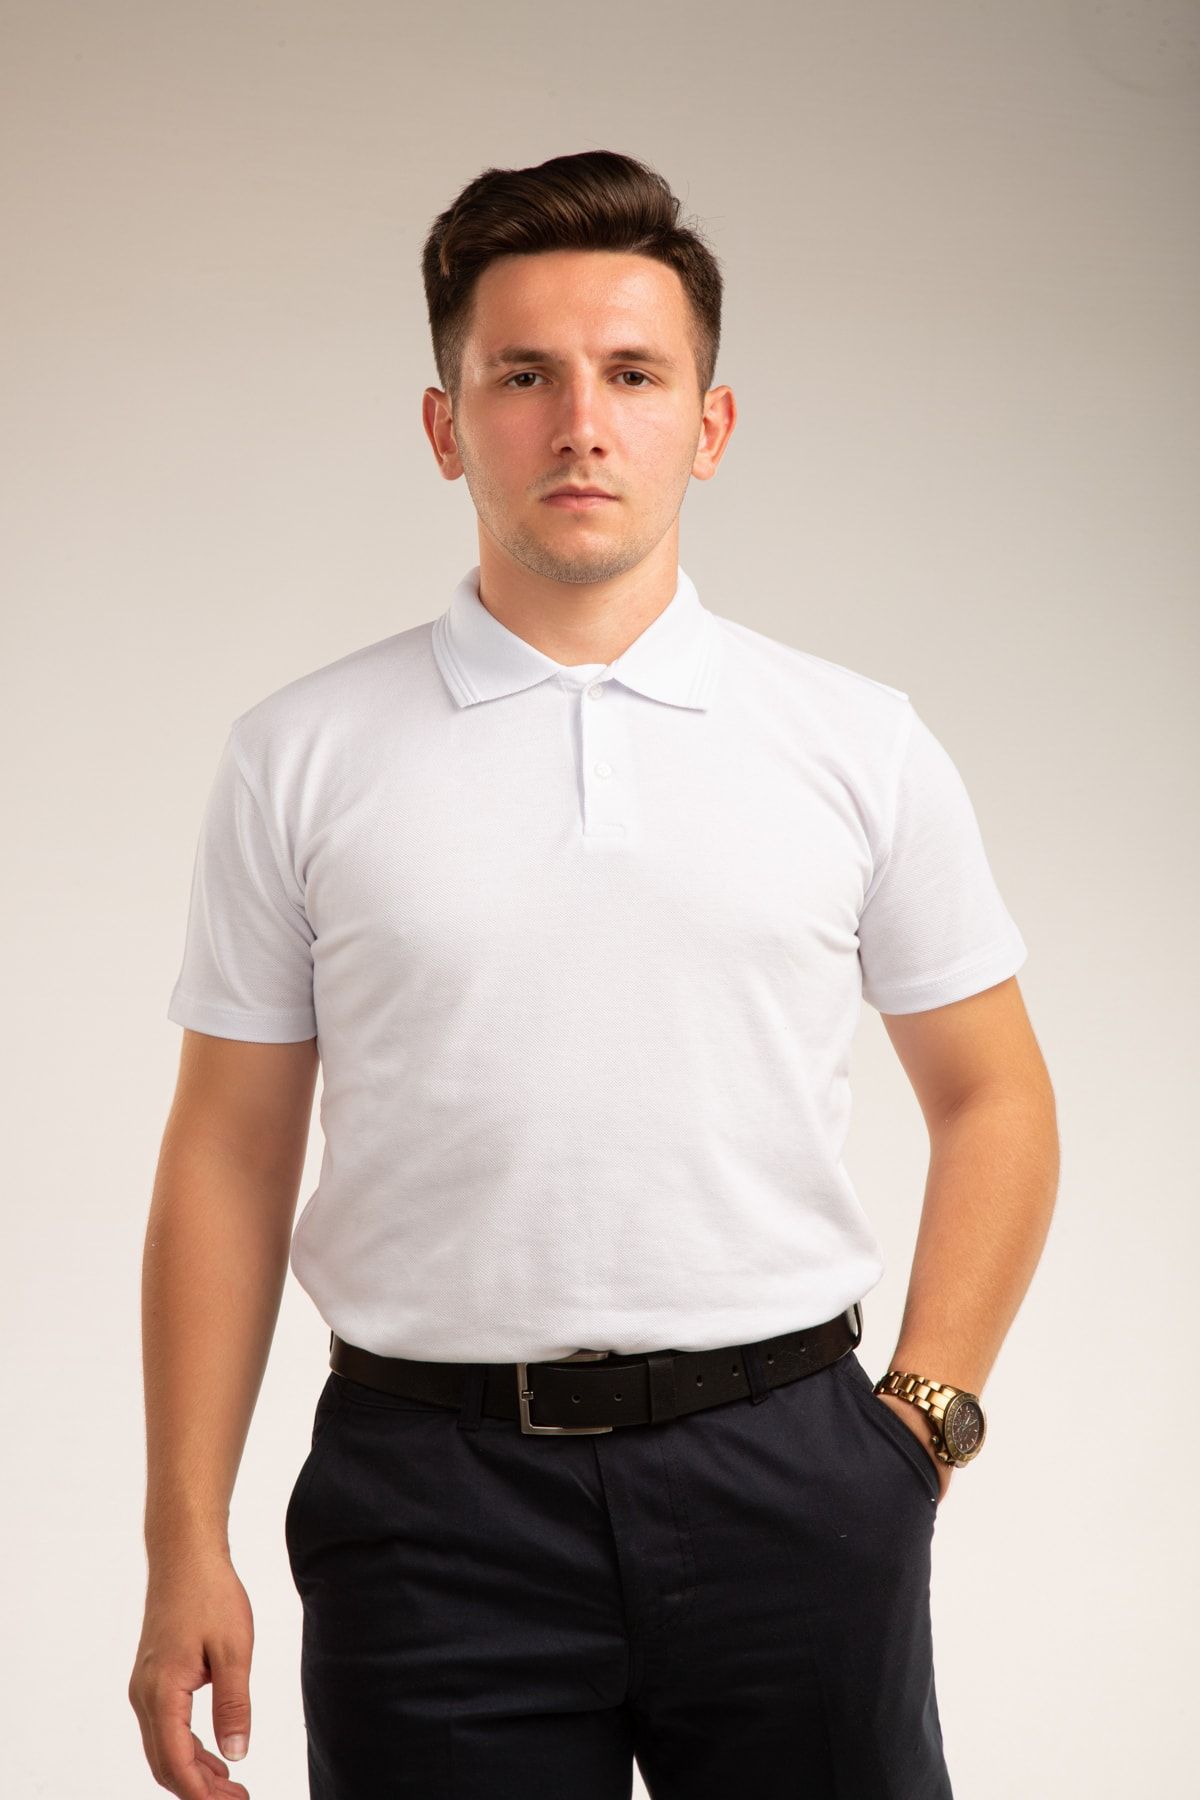 Dragora Beyaz Kısa Kollu Genç Boy Lise Okul Lakos Polo Yaka T-shirt